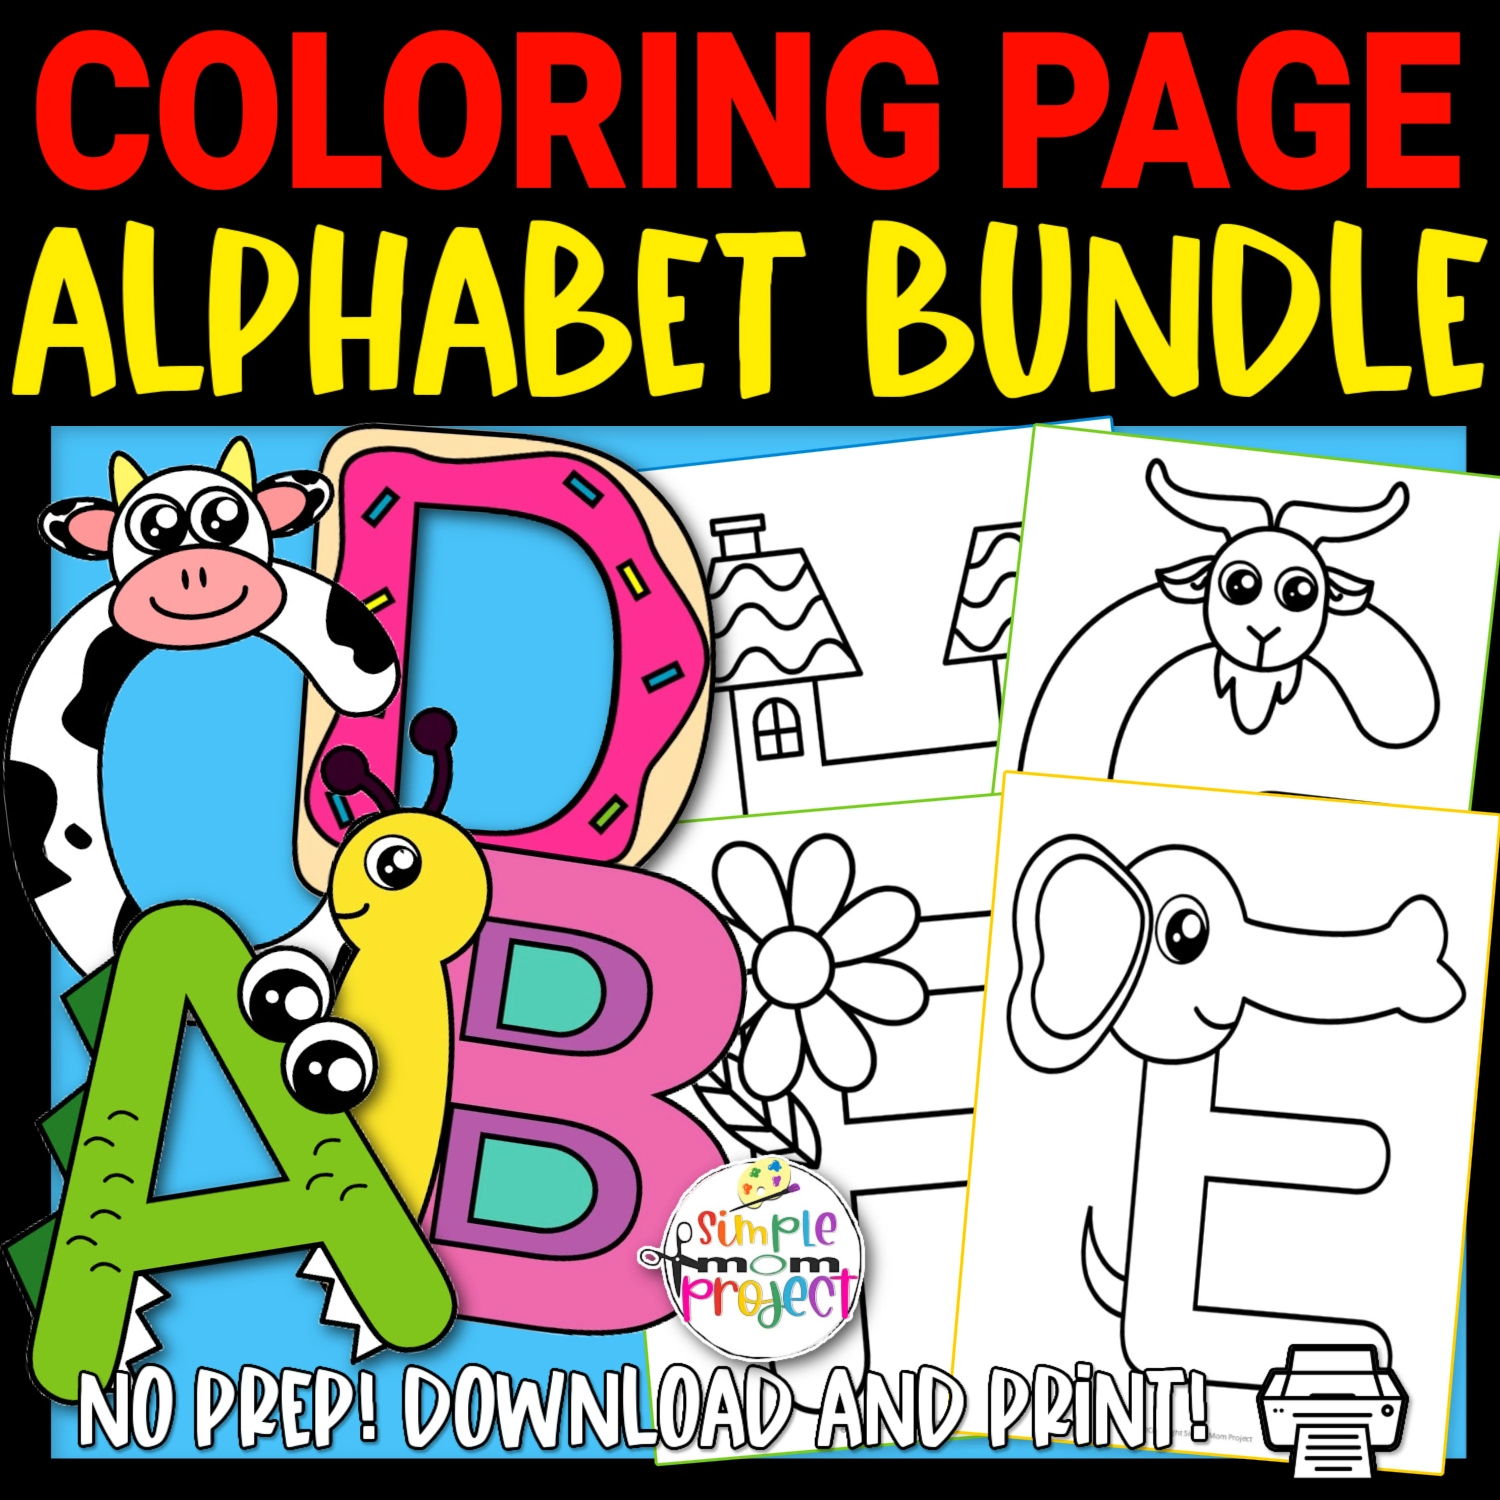 Fun alphabet coloring page bundle